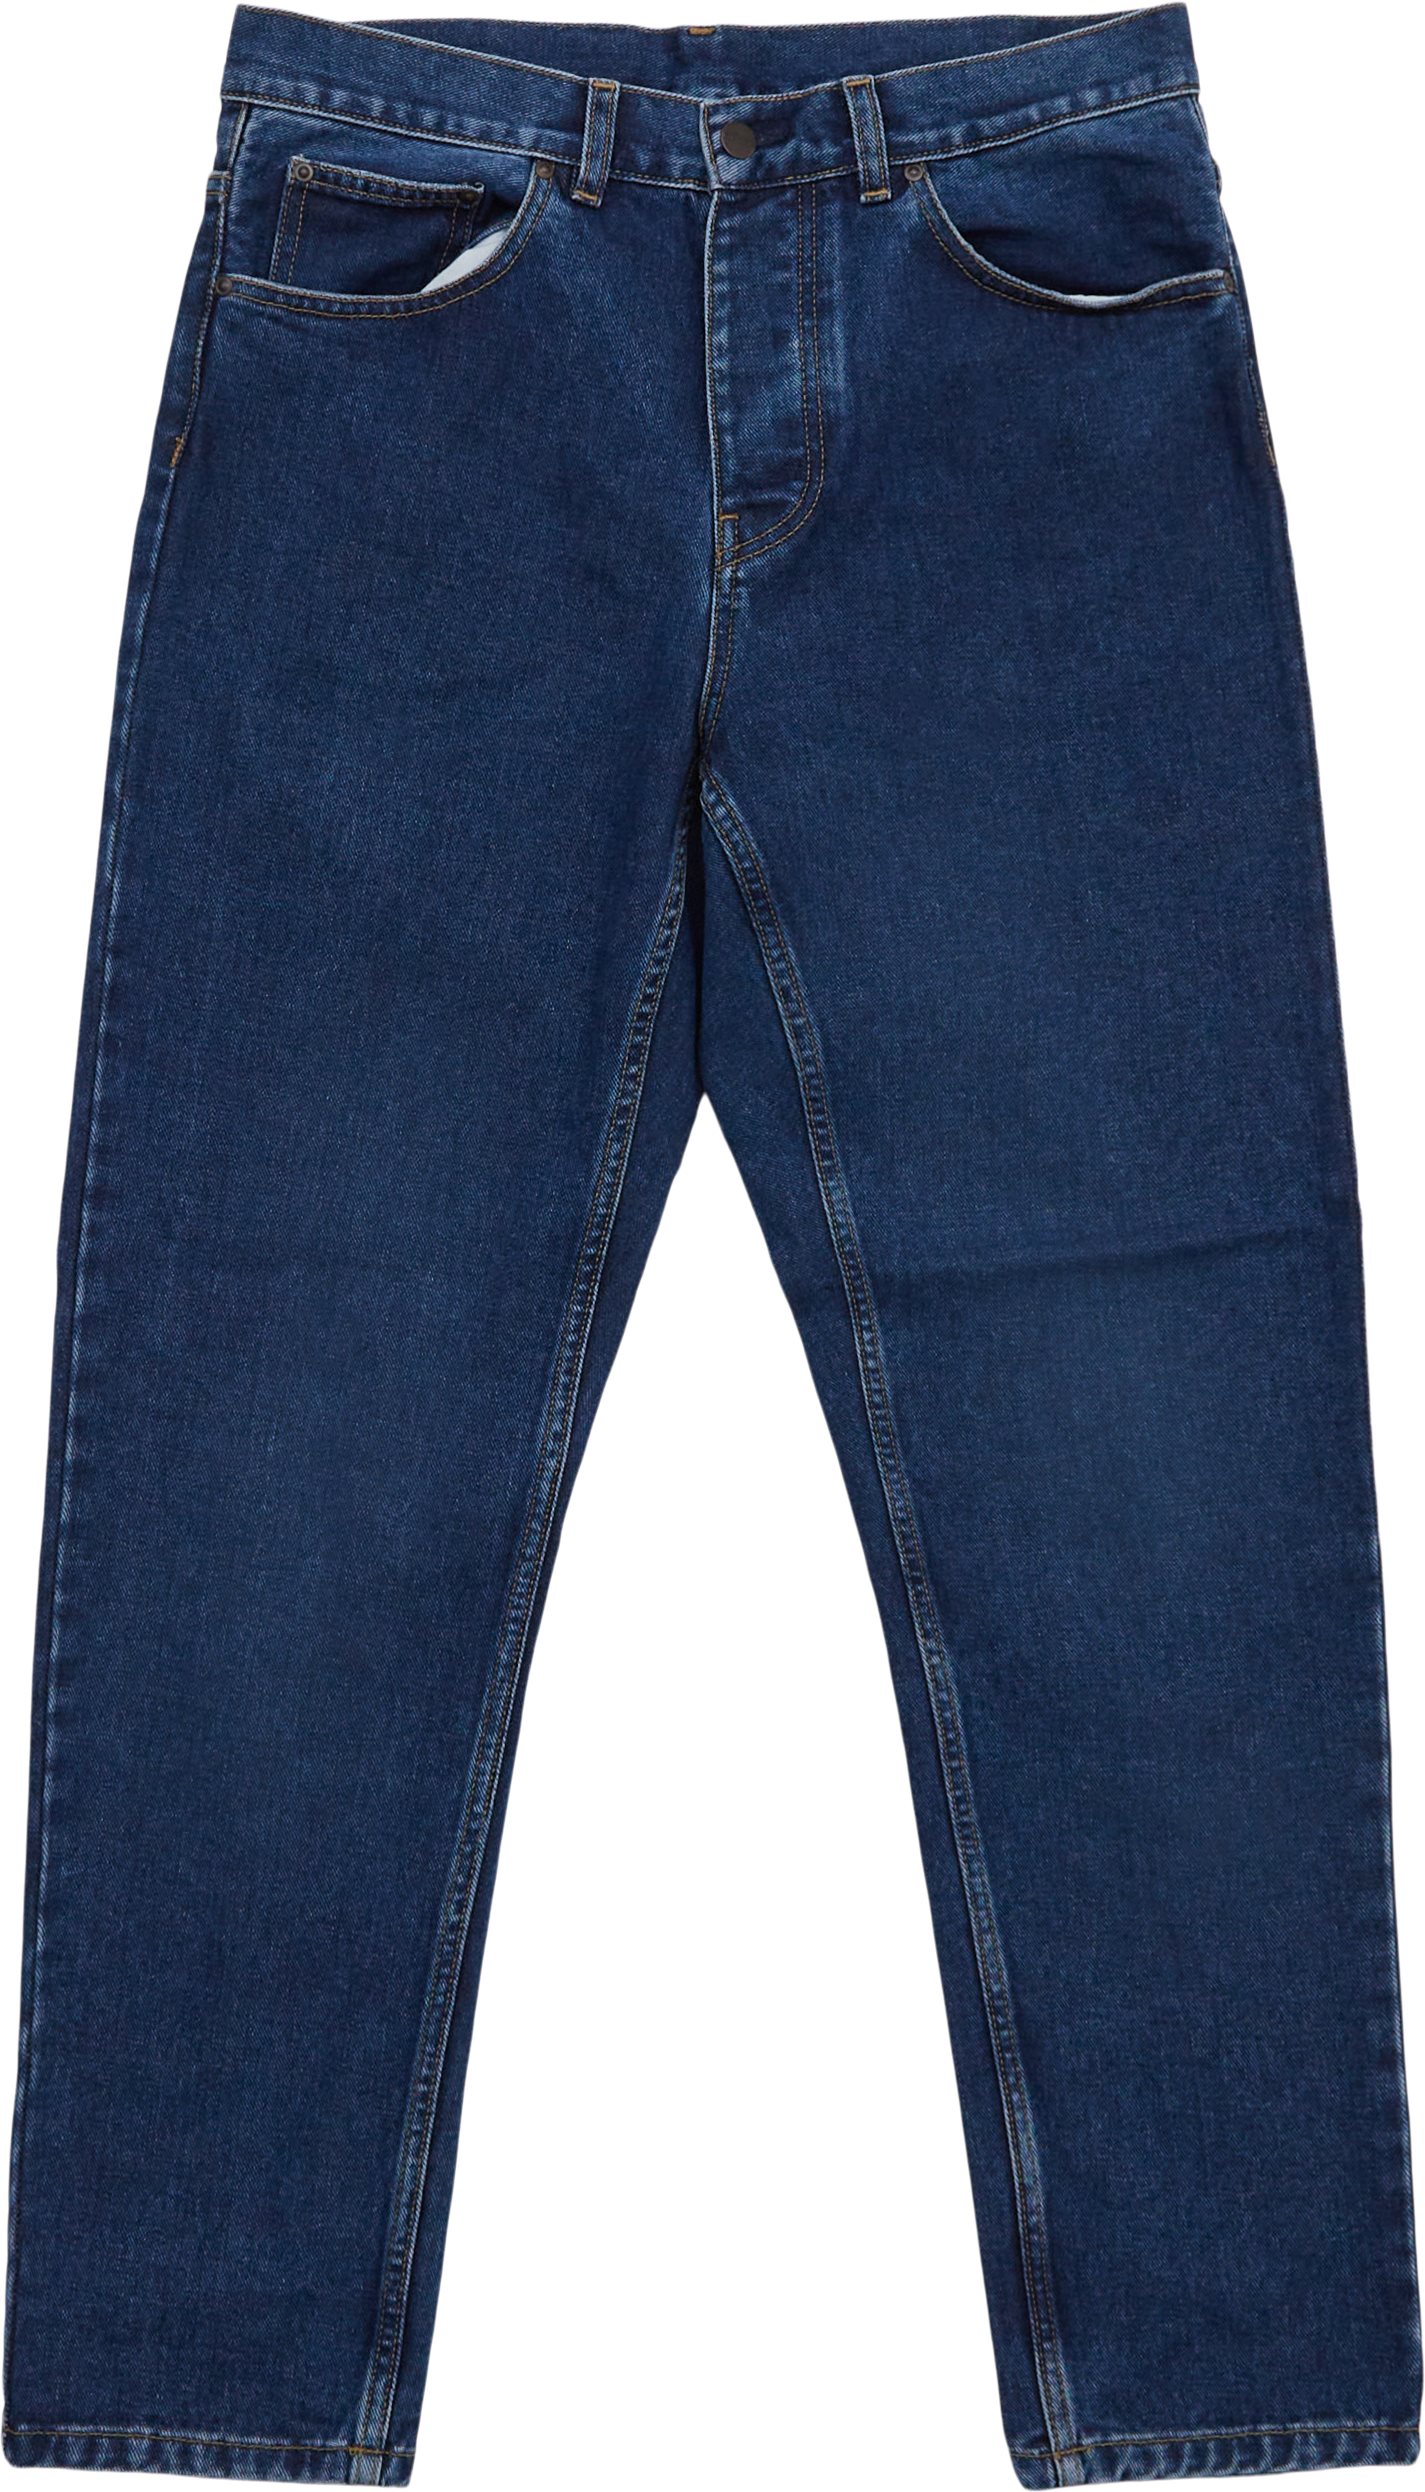 Carhartt WIP Jeans NEWEL PANT I029208.0106 Denim